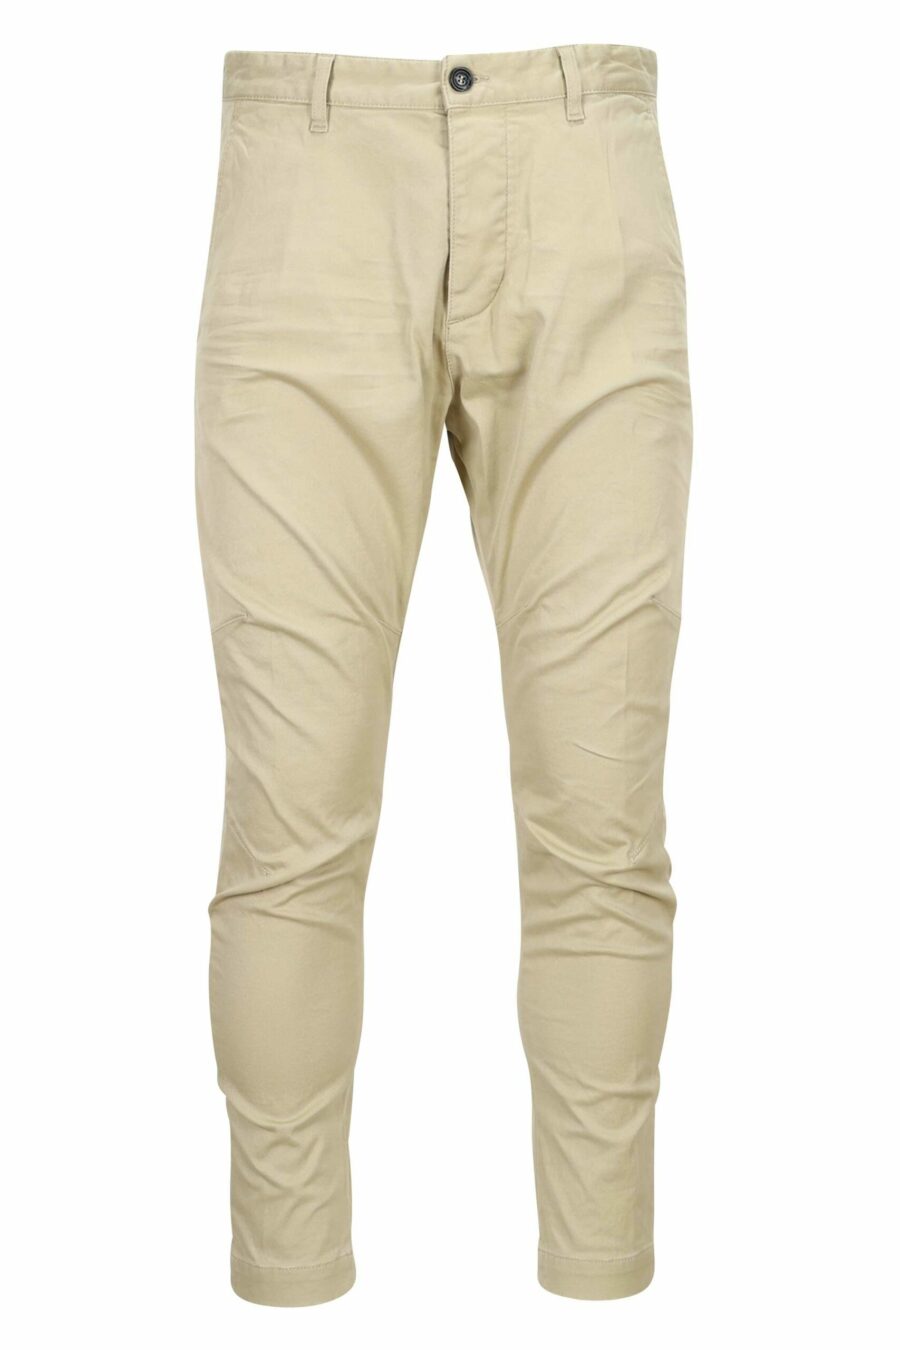 Pantalón beige "sexy chino pant" con minilogo - 8052134973257 scaled